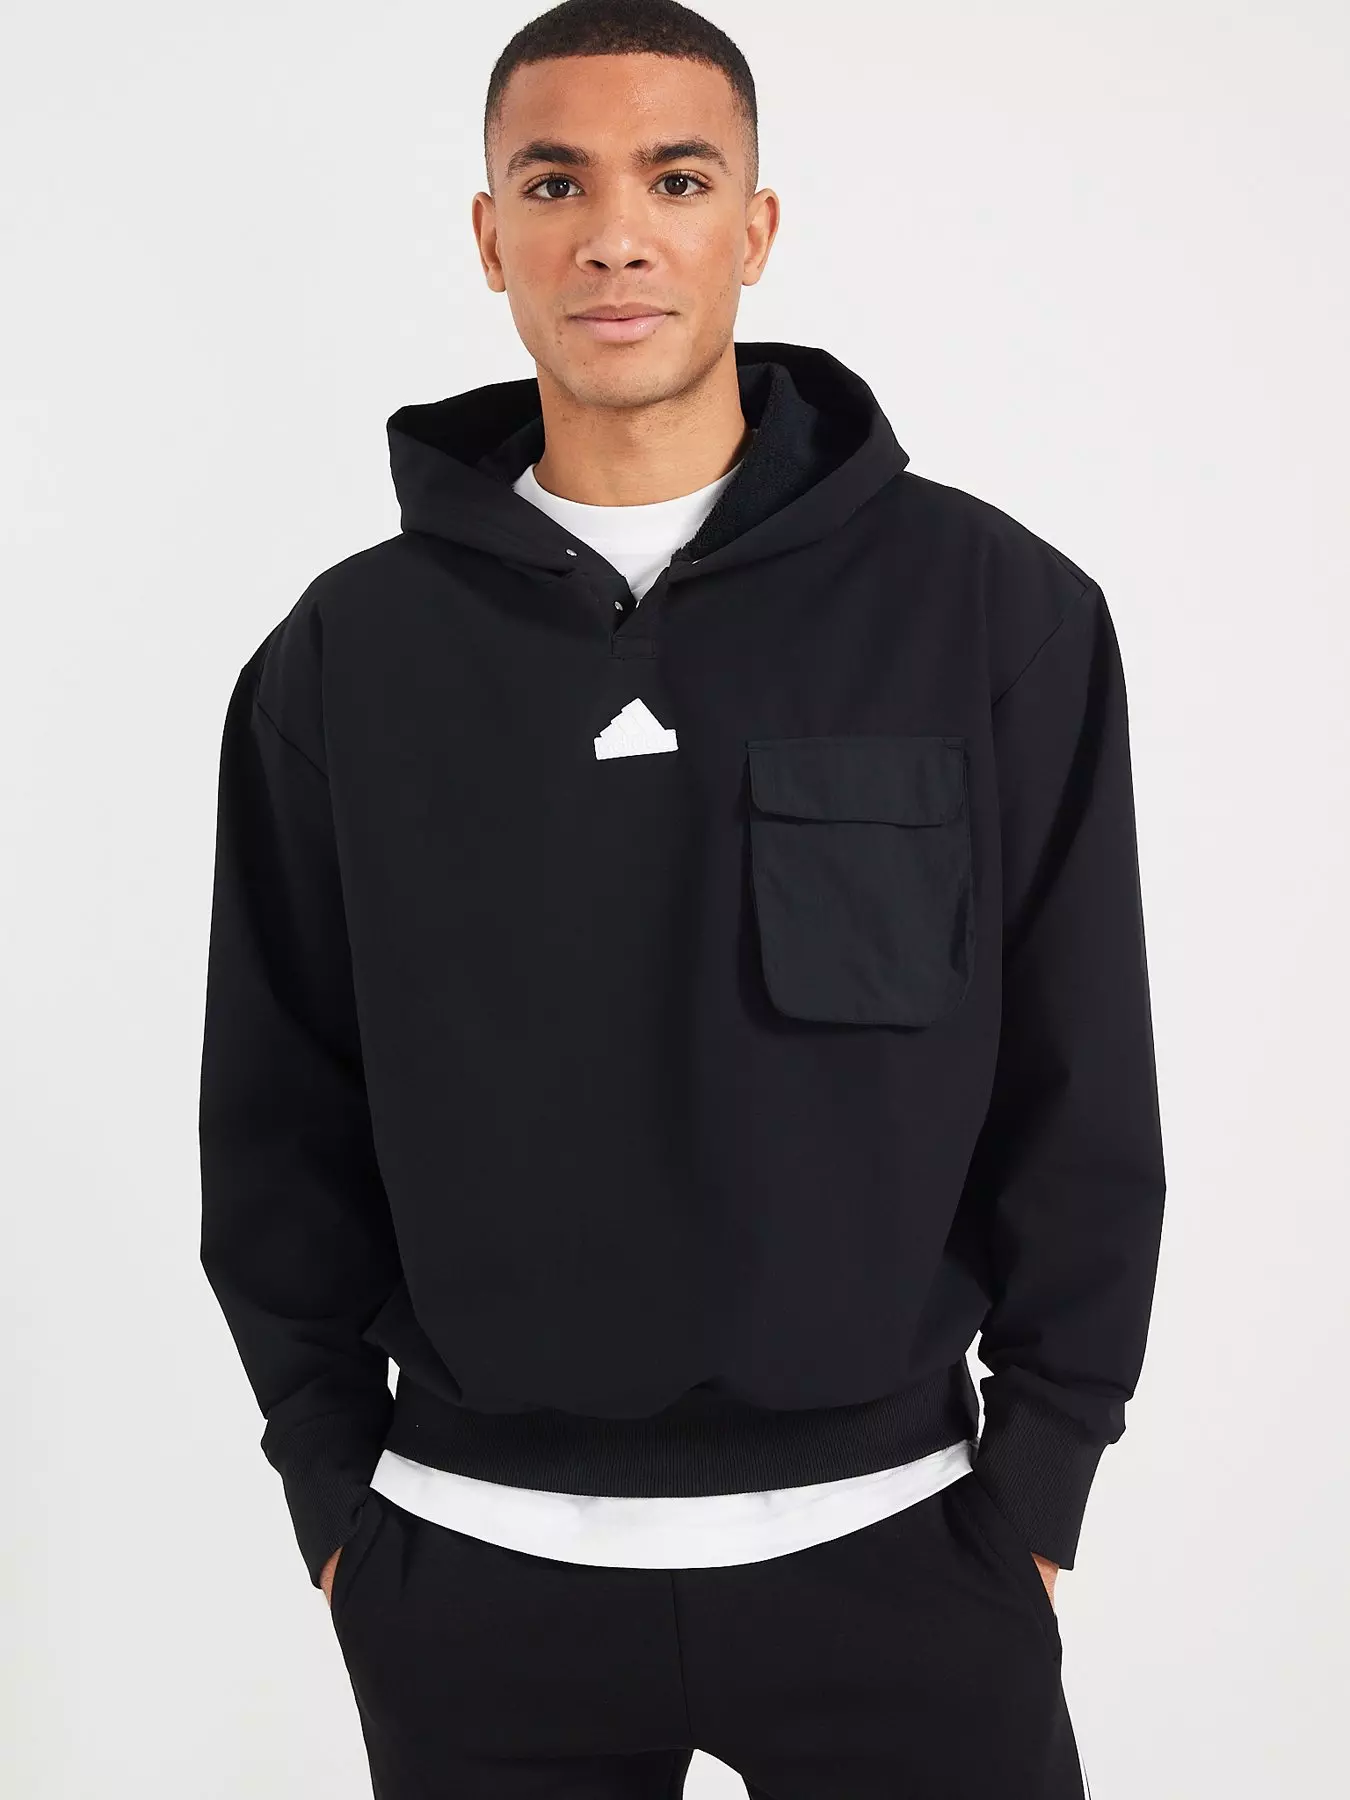 Tenmix Mens Zip Up Hooded Sweatshirt Soft Outwear Color Block Workout Hoodies  Jackets Long Sleeve Hoodie Jacket White XL 